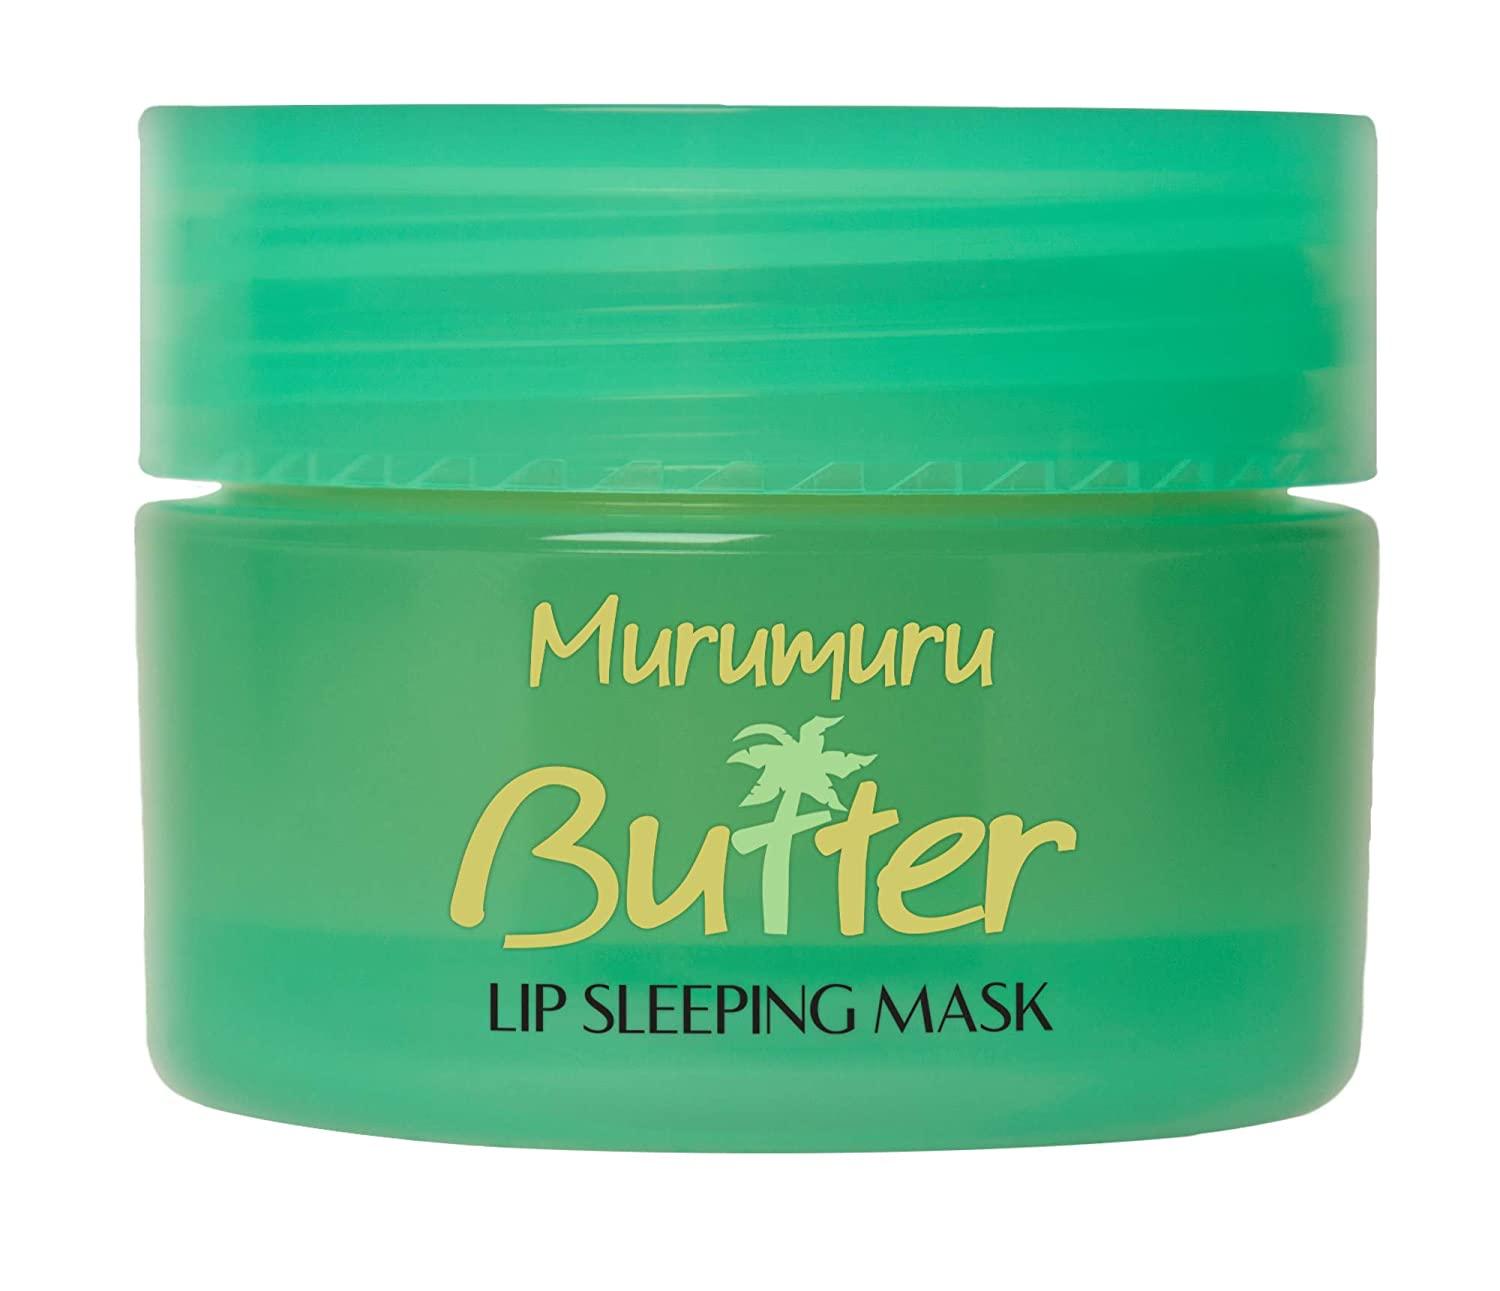 Murumuru Butter – Dauphine Organics